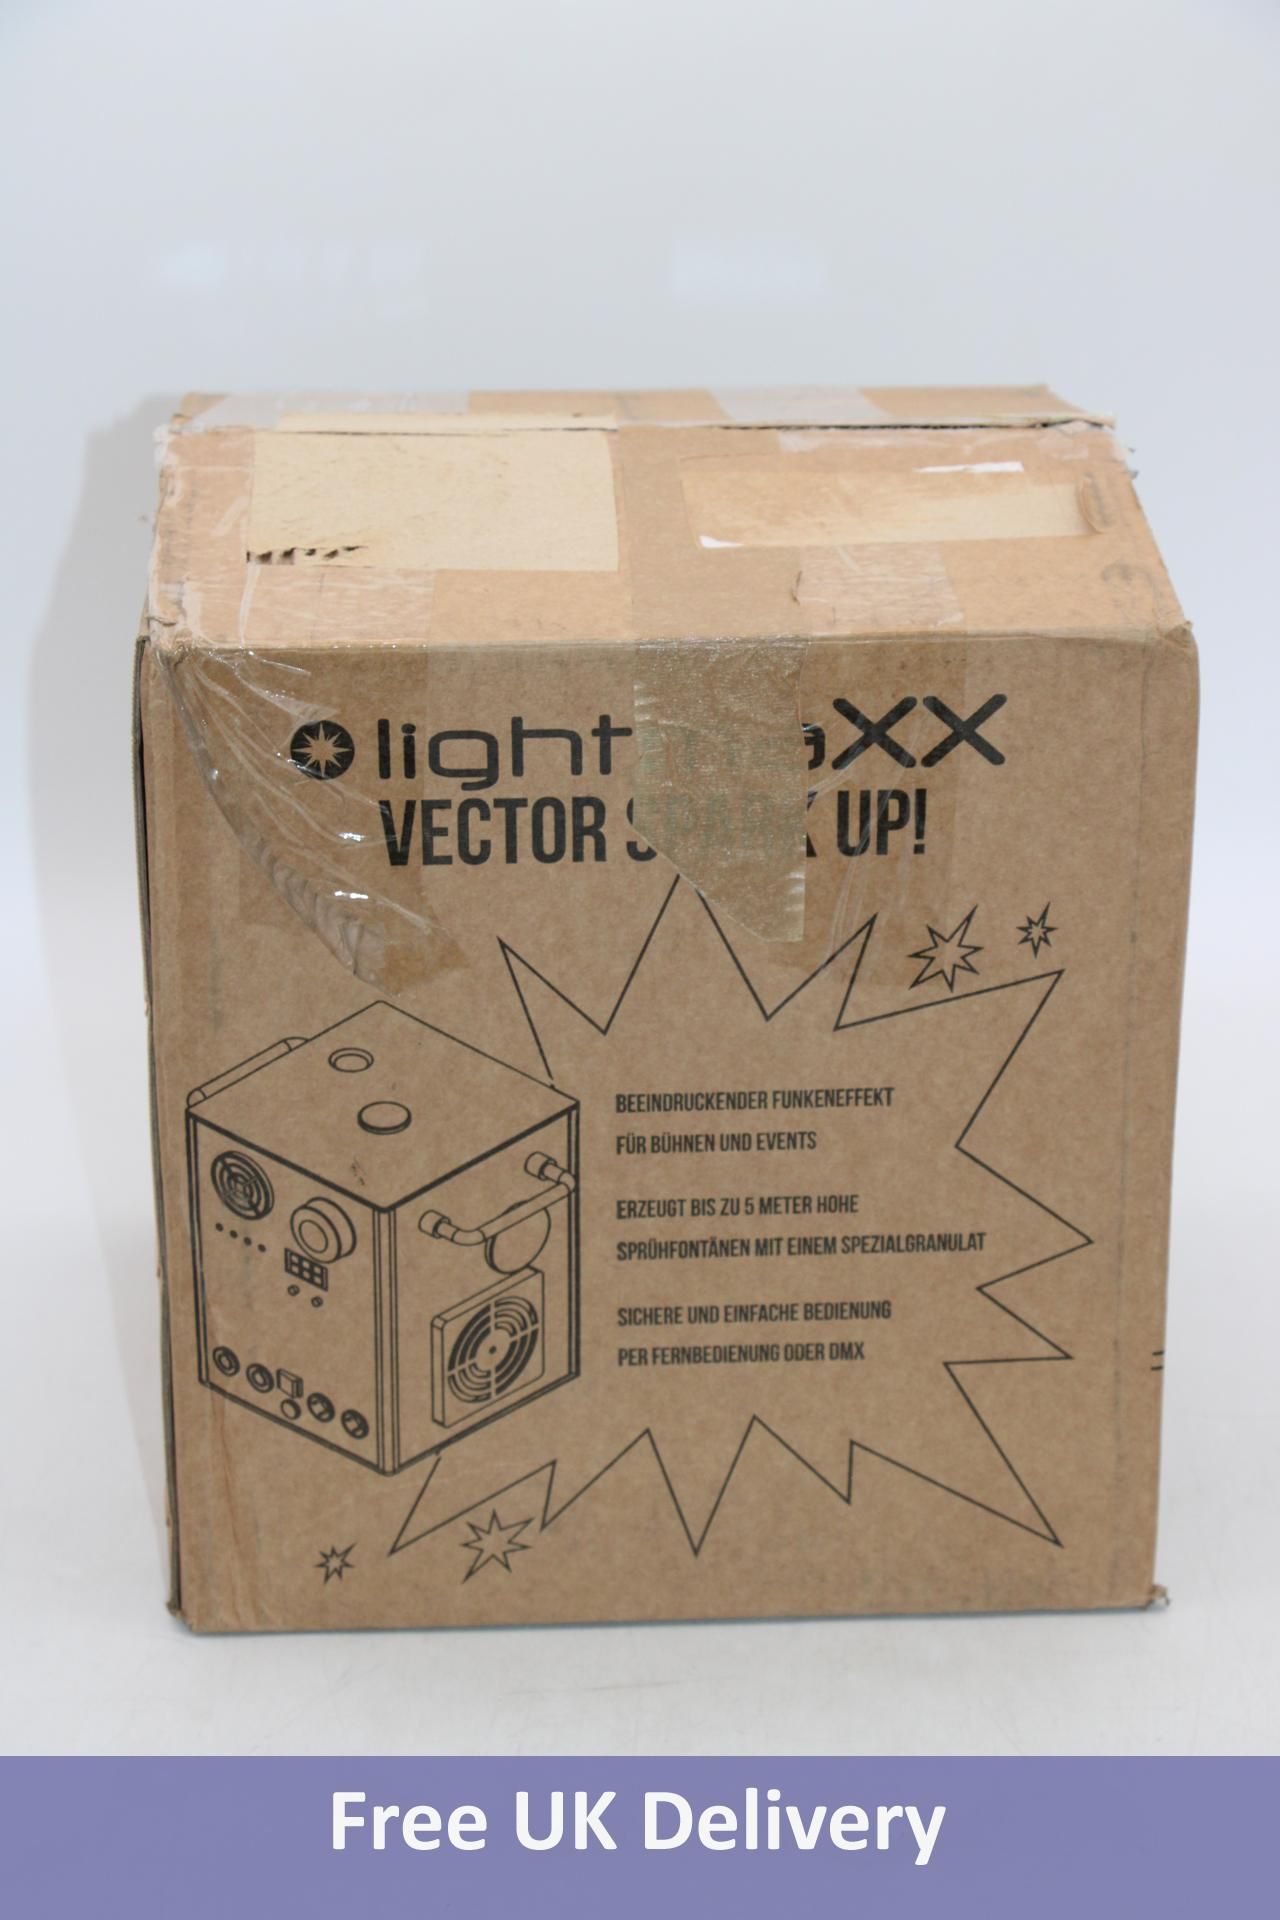 LightmaXX Vector Spark Up. Box damaged